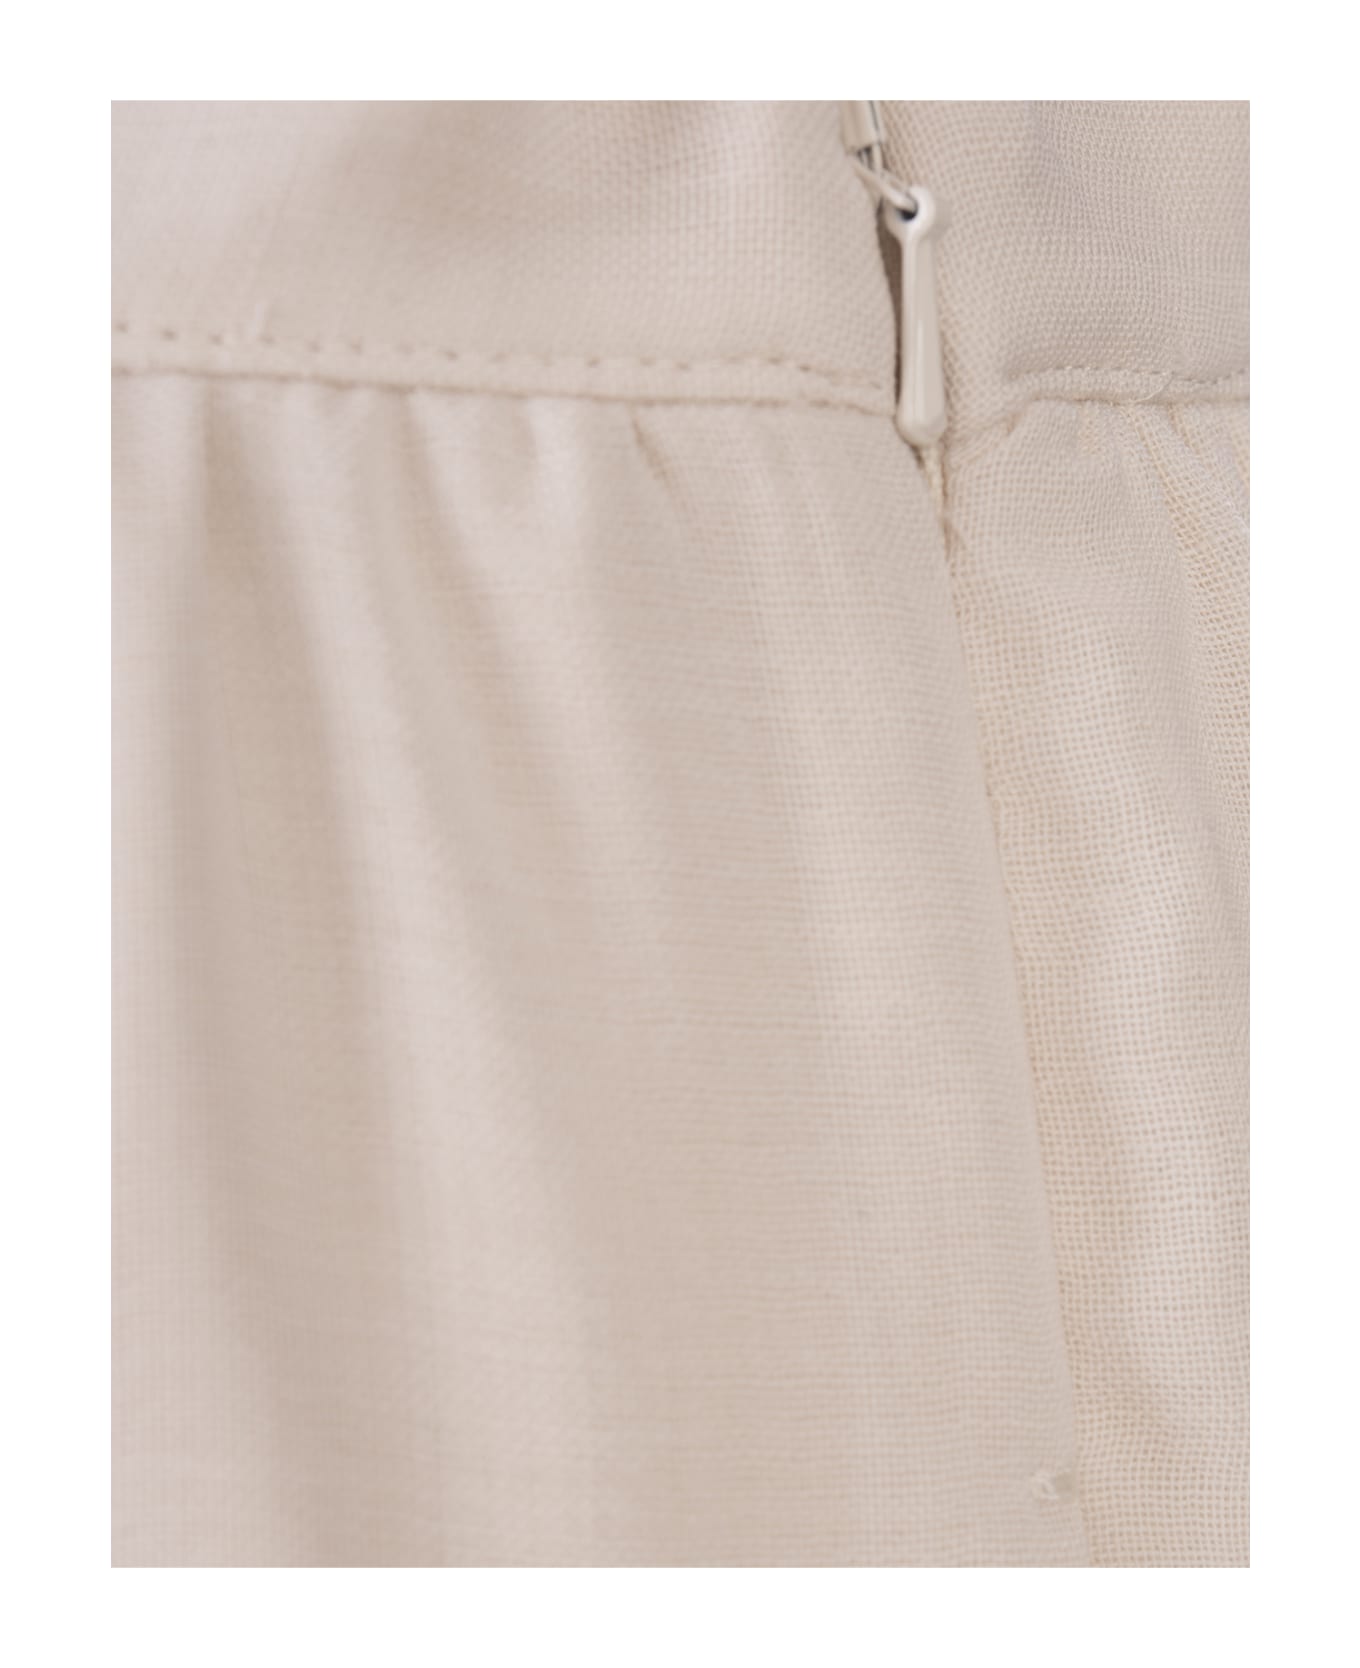 Max Mara Ivory White Cafila Long Skirt - White